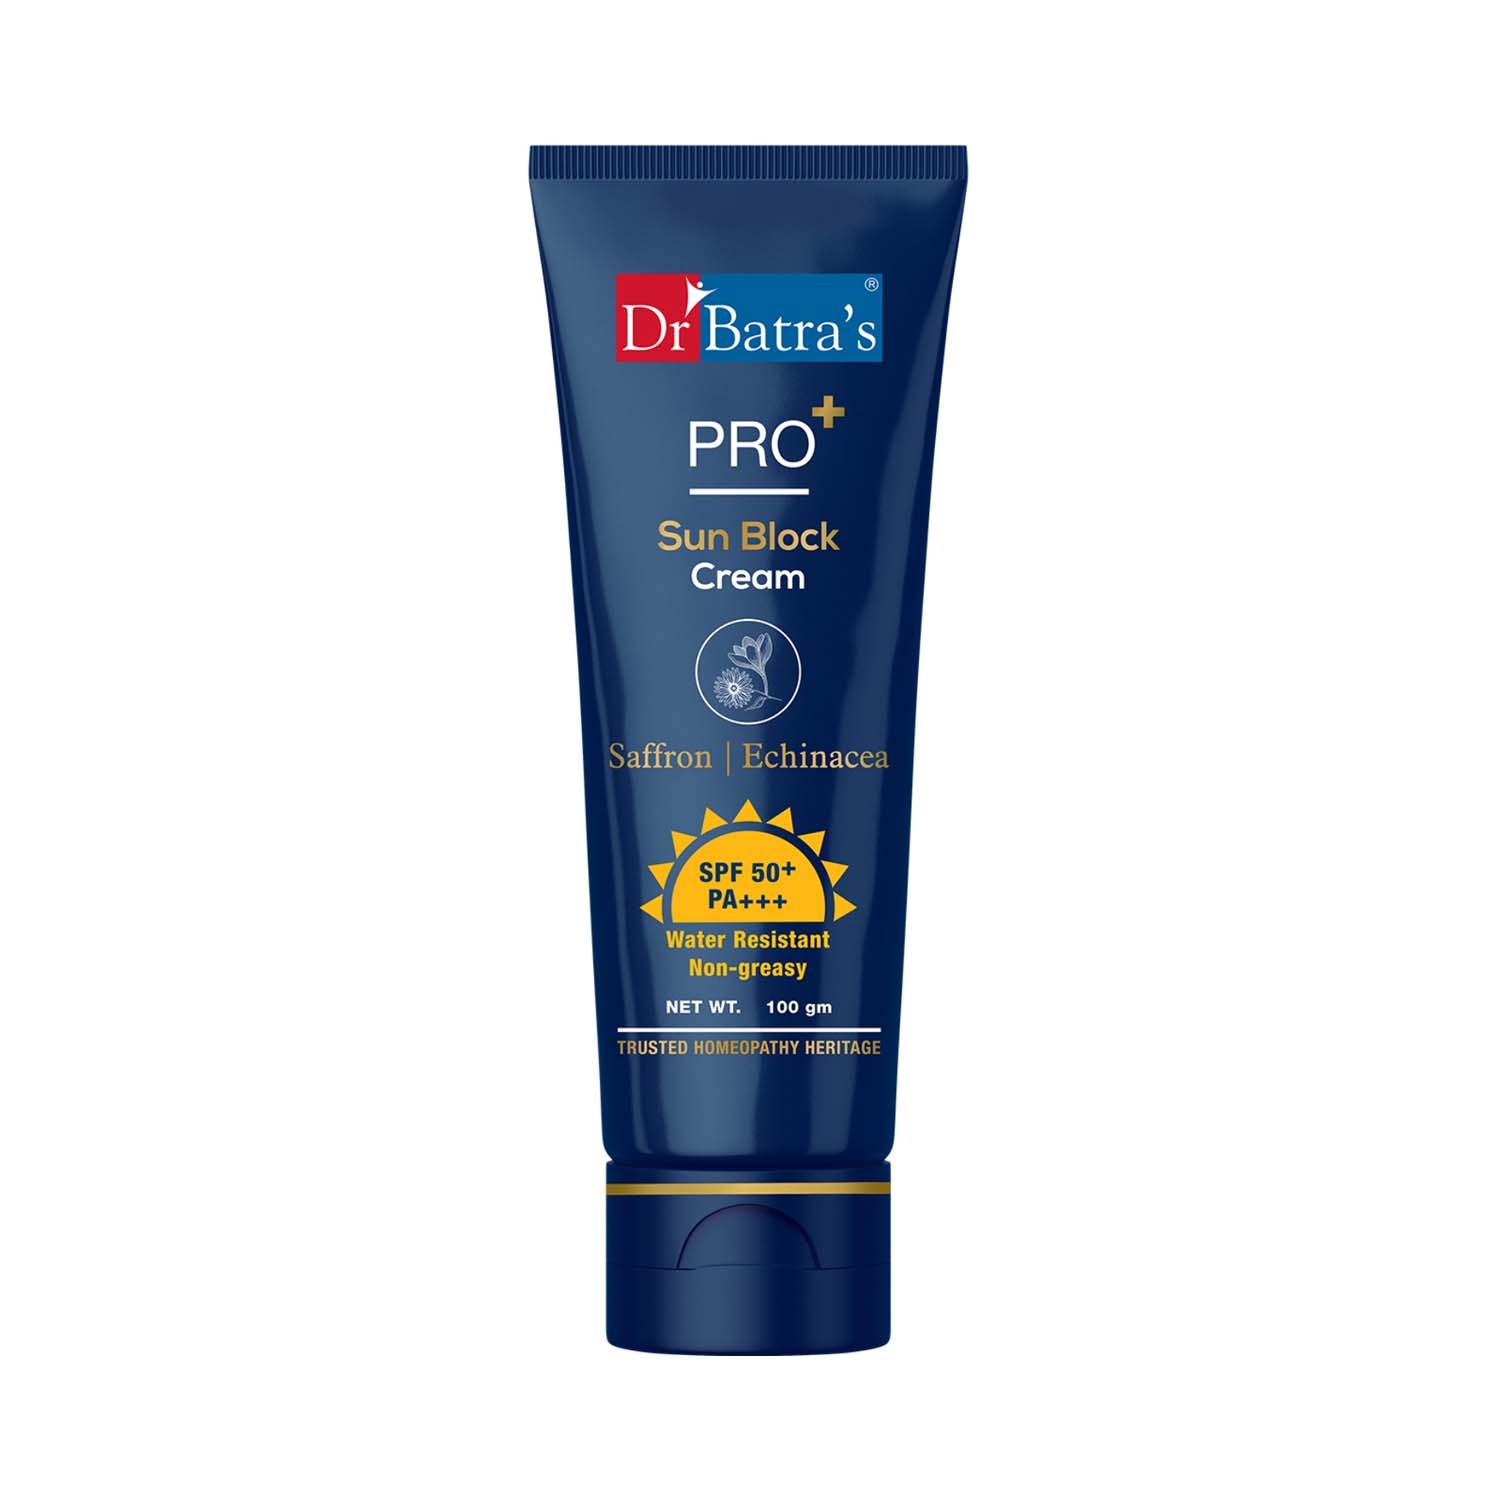 Dr Batra's Pro Sun Block Cream Sunscreen (100g)